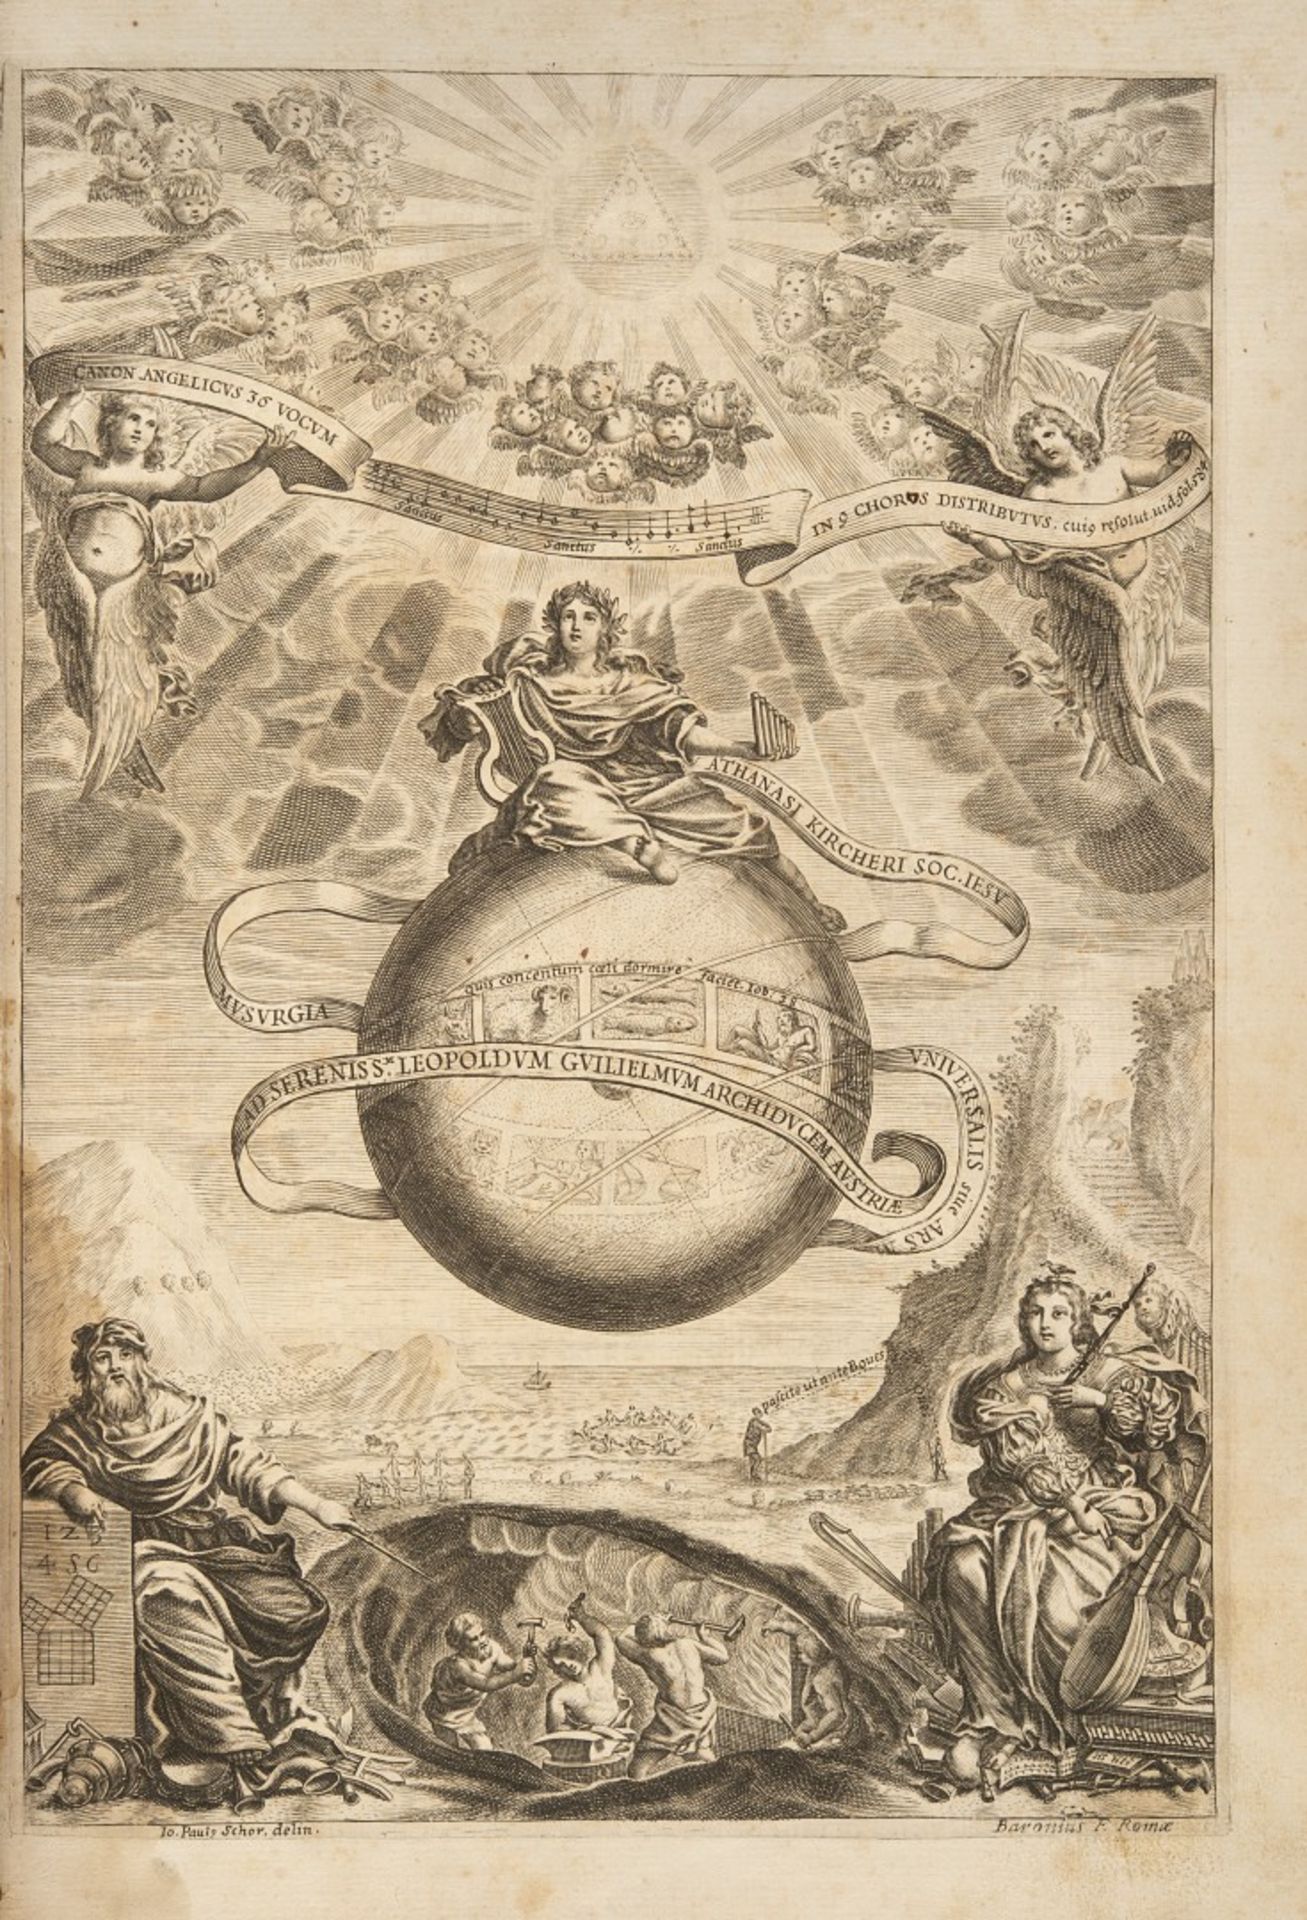 Kircher, Athanasius Musurgia universalis sive ars magna consoni et dissoni in X libros digesta.